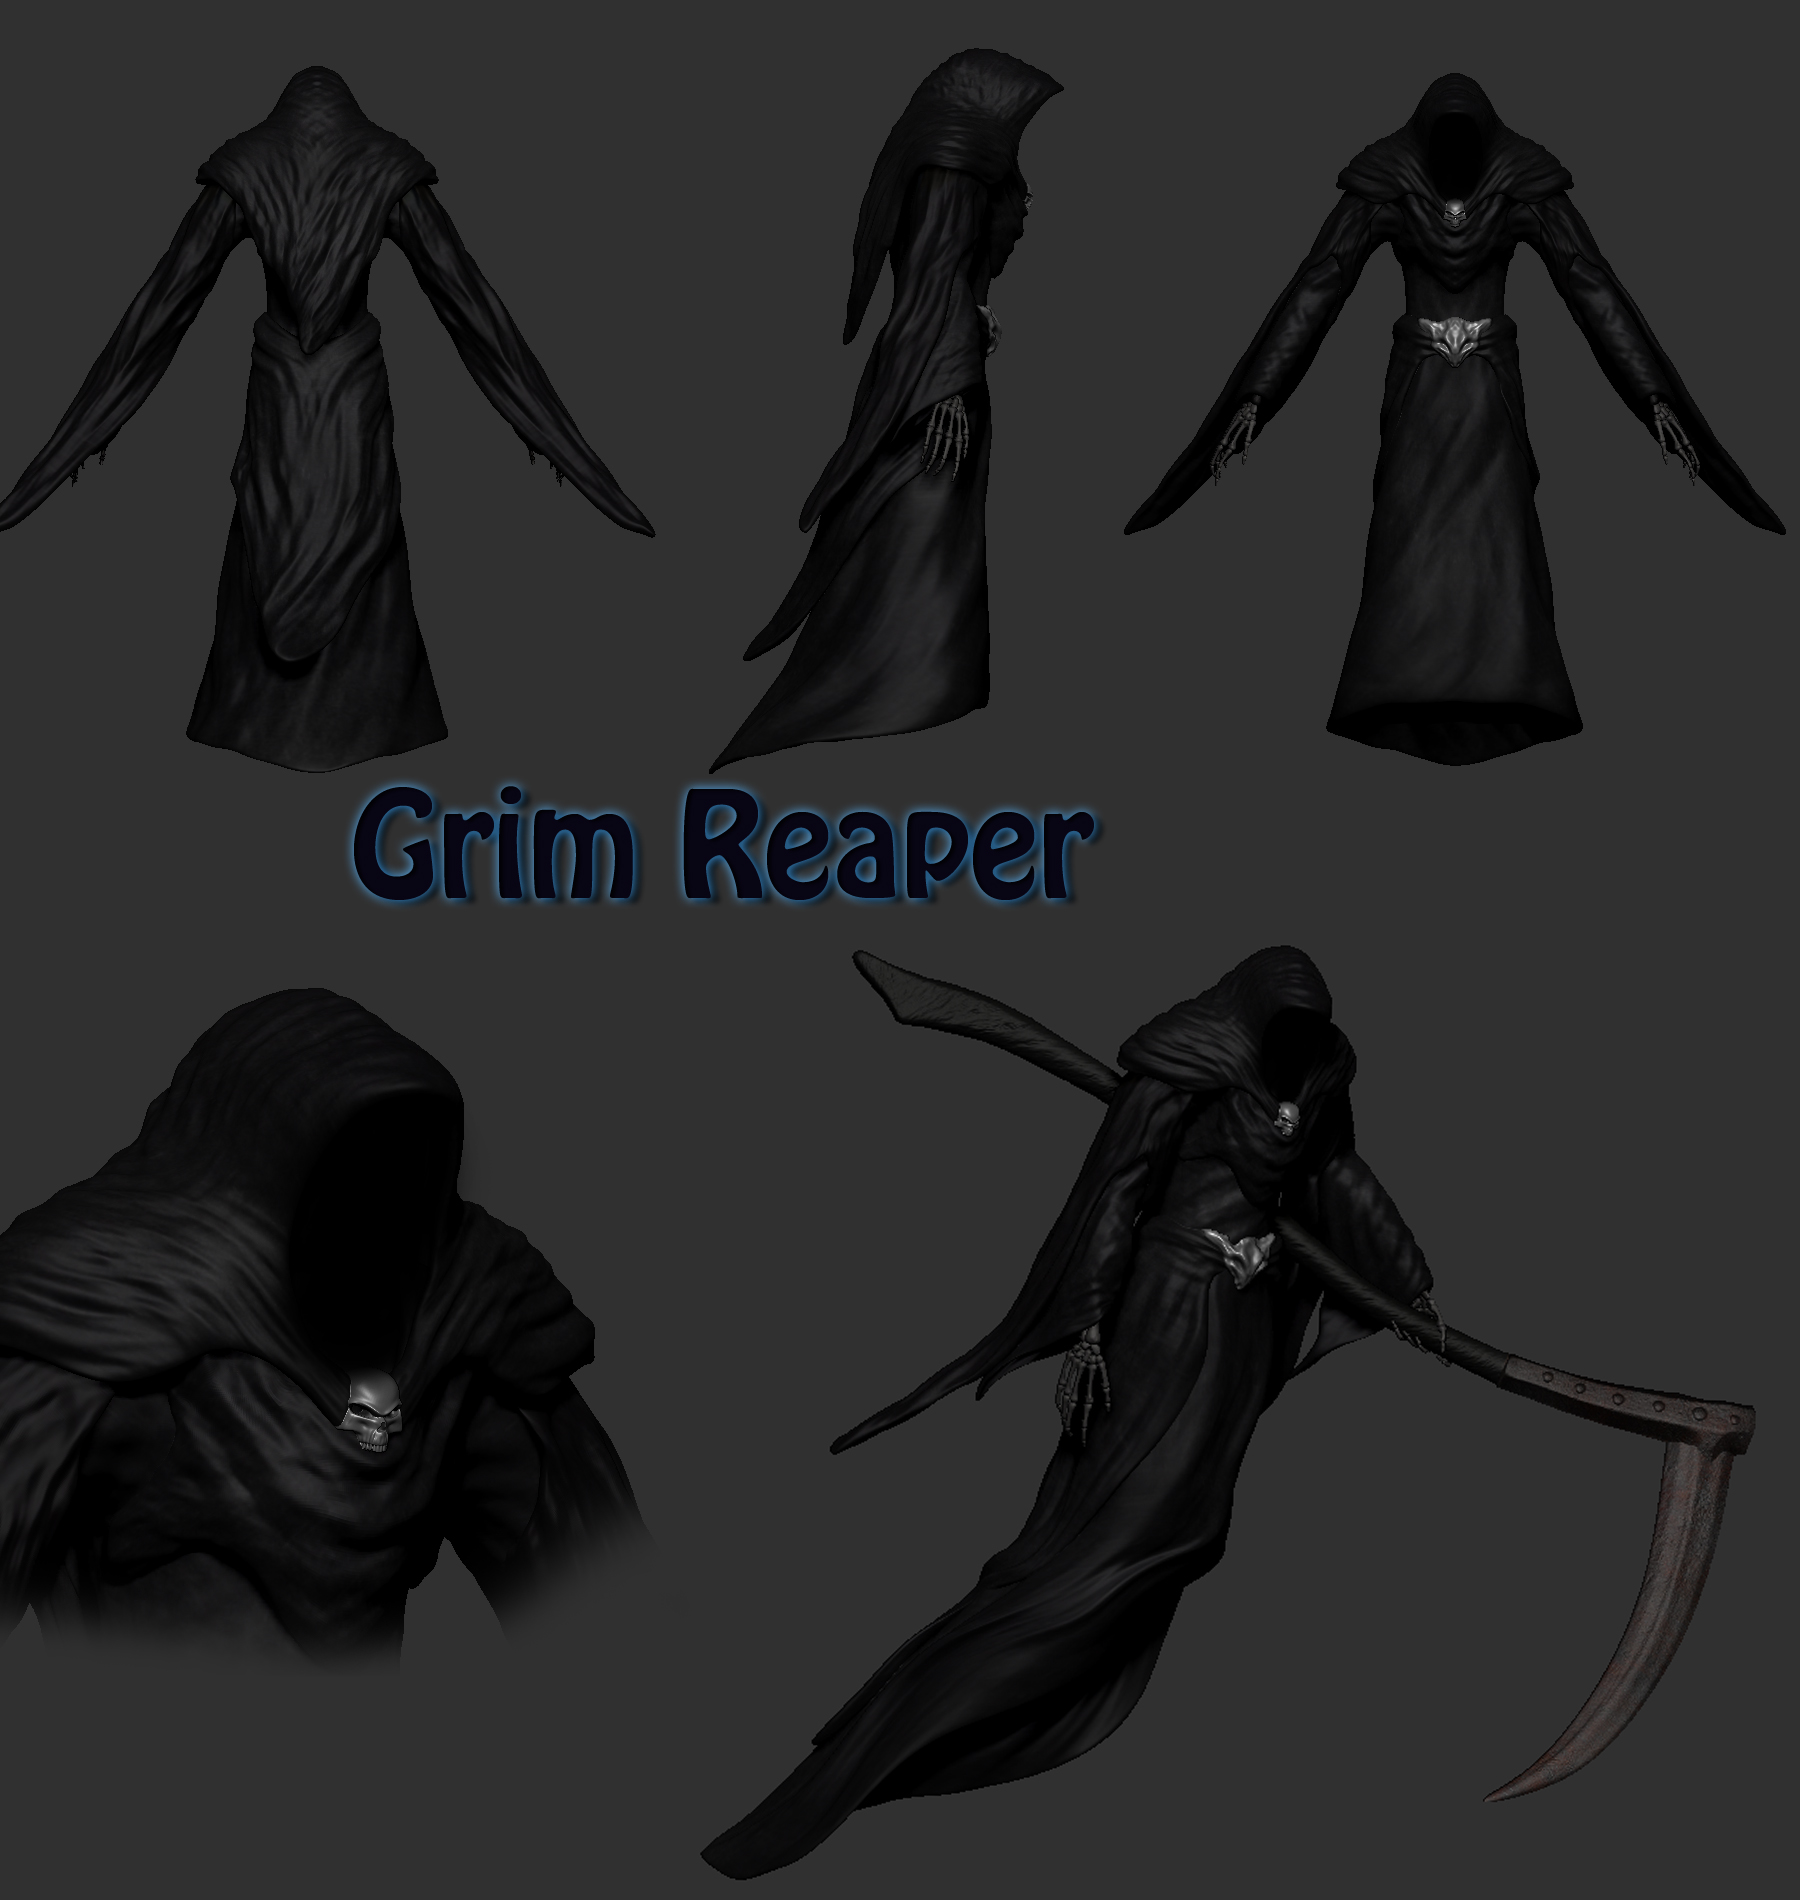 https://media.moddb.com/images/groups/1/1/173/Grim_Reaper.jpg